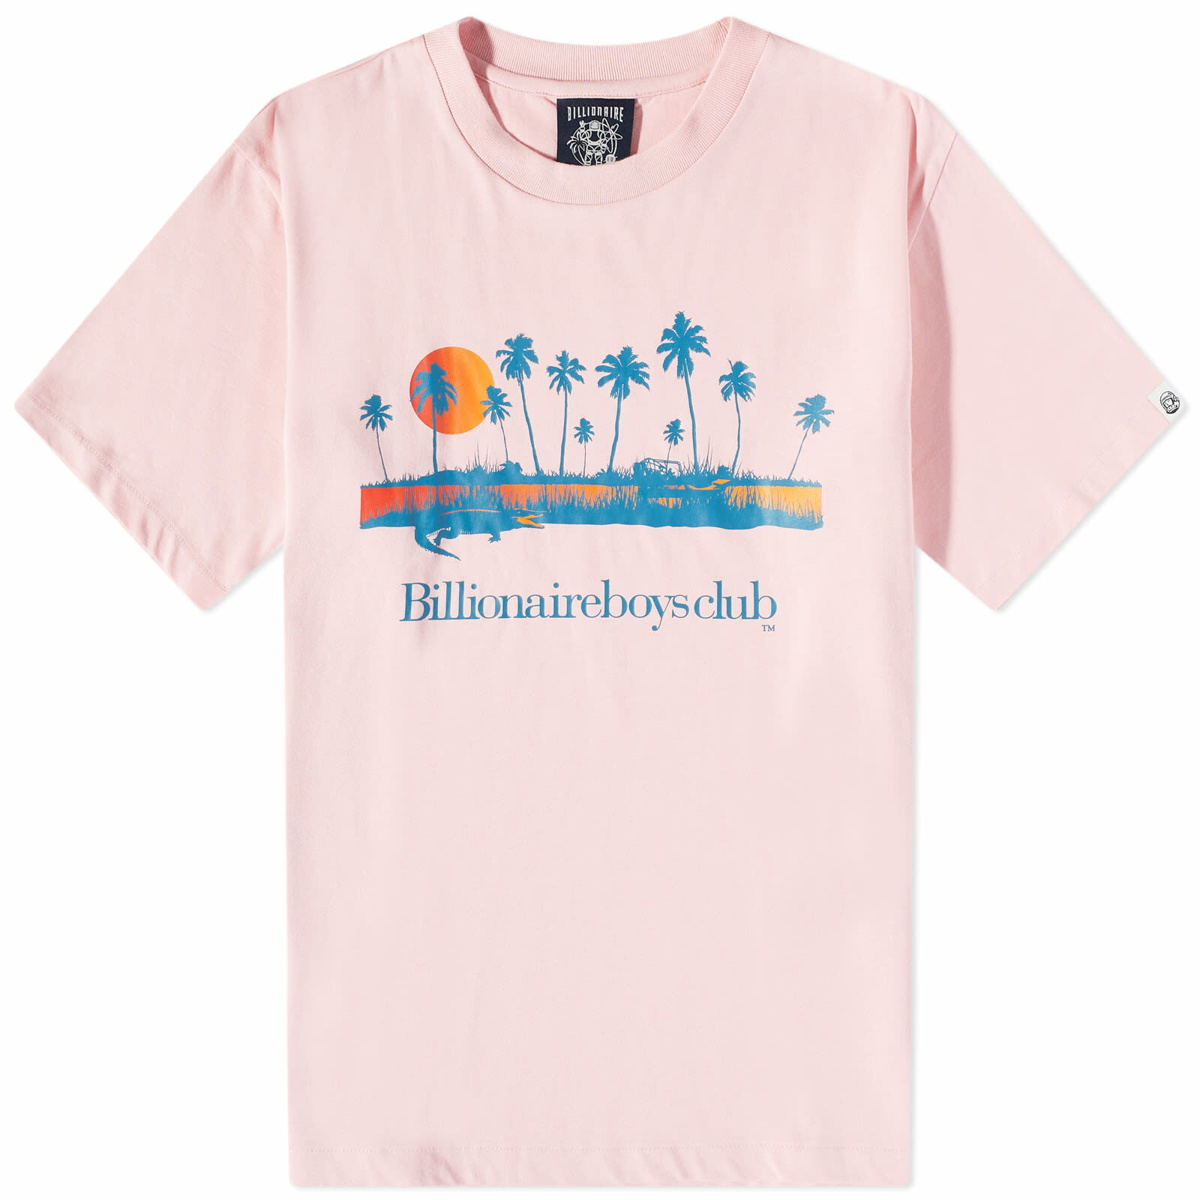 Billionaire Boys Club Men's Evergreen T-Shirt in Pink Billionaire Boys Club